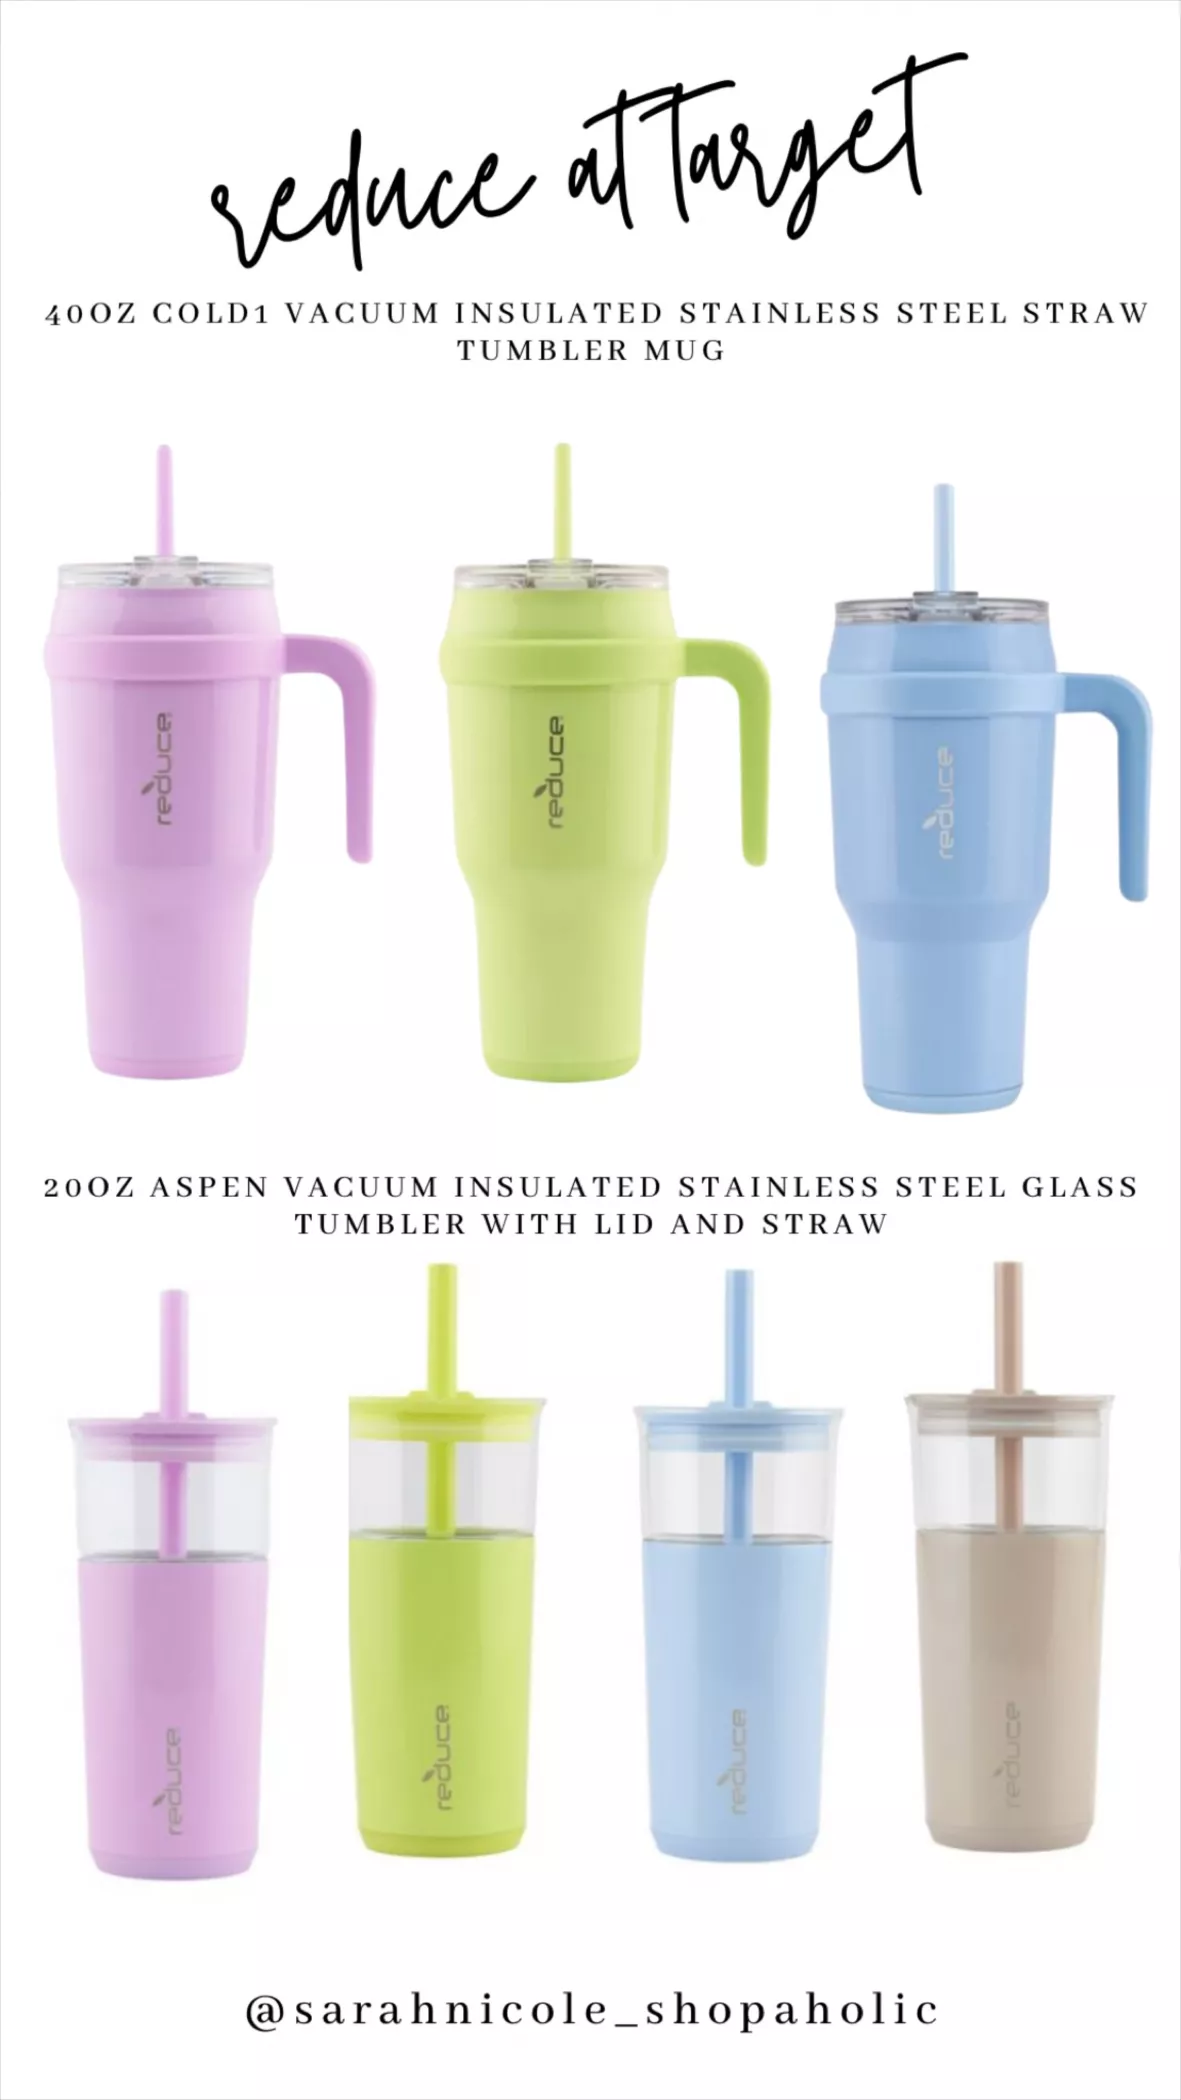 Reduce 20oz Aspen Vacuum Insulated Stainless Steel Glass Tumbler